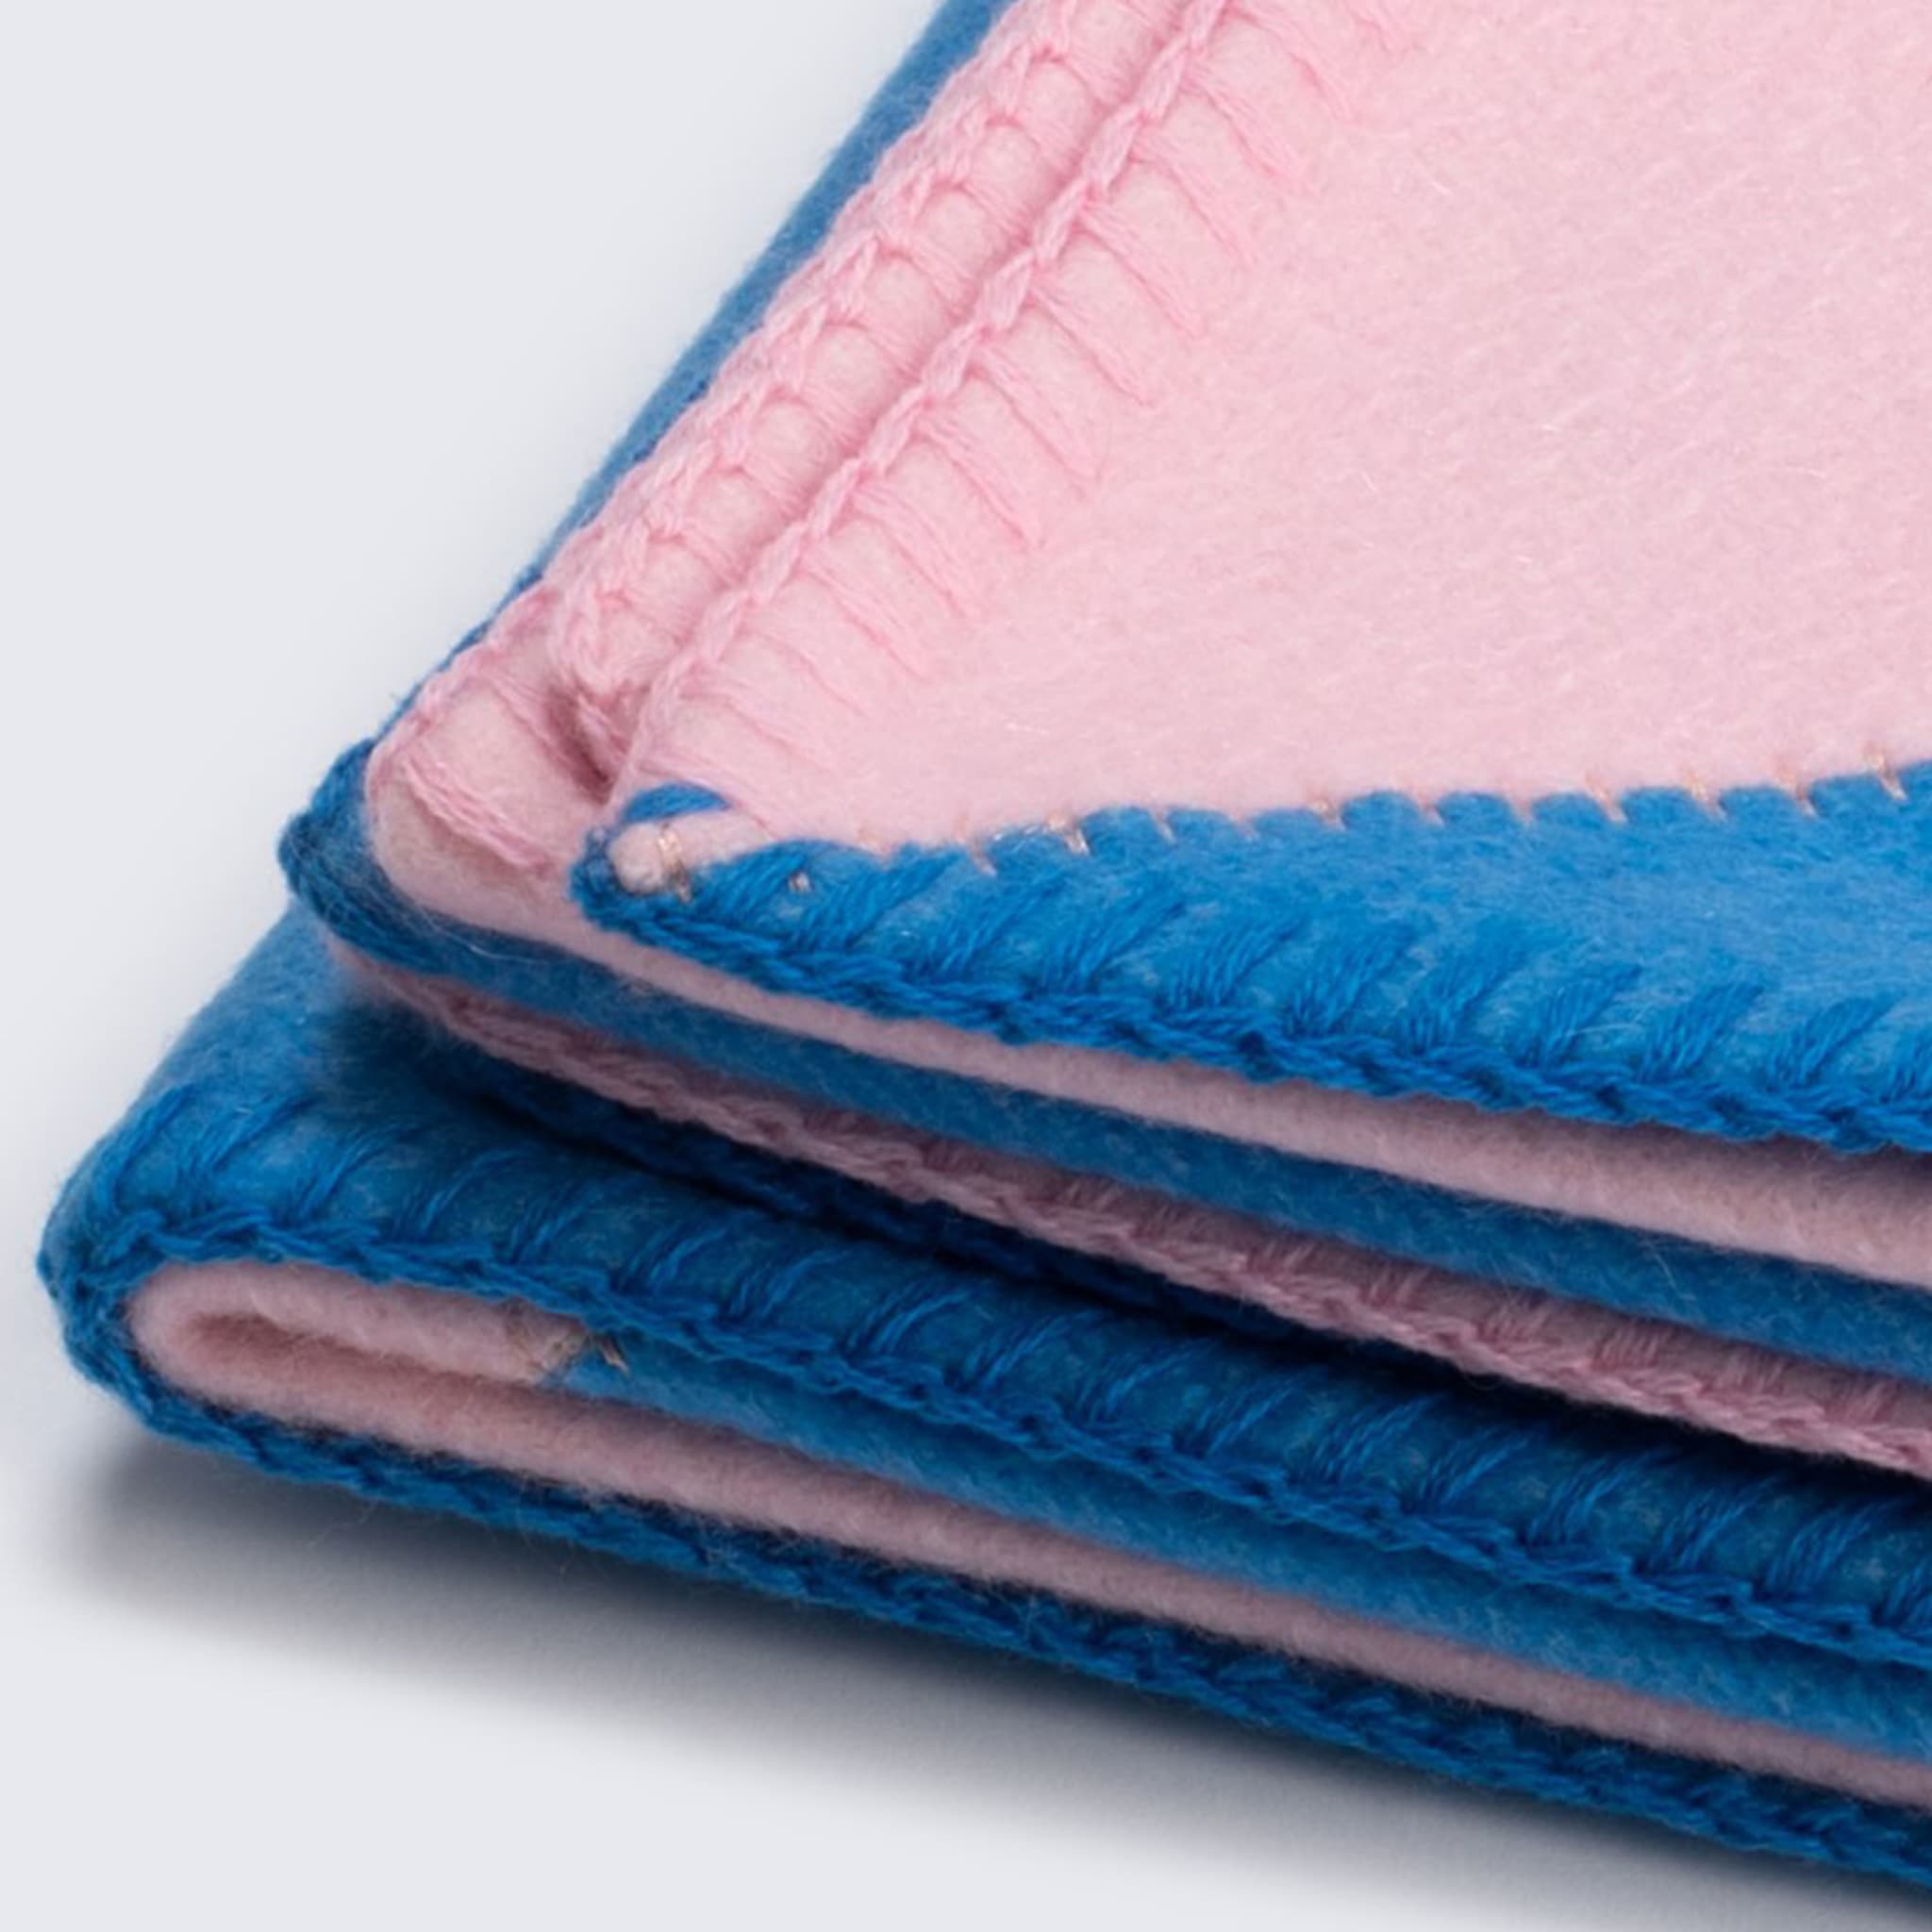 Biella Pink and Blue Blanket - Alternative view 2